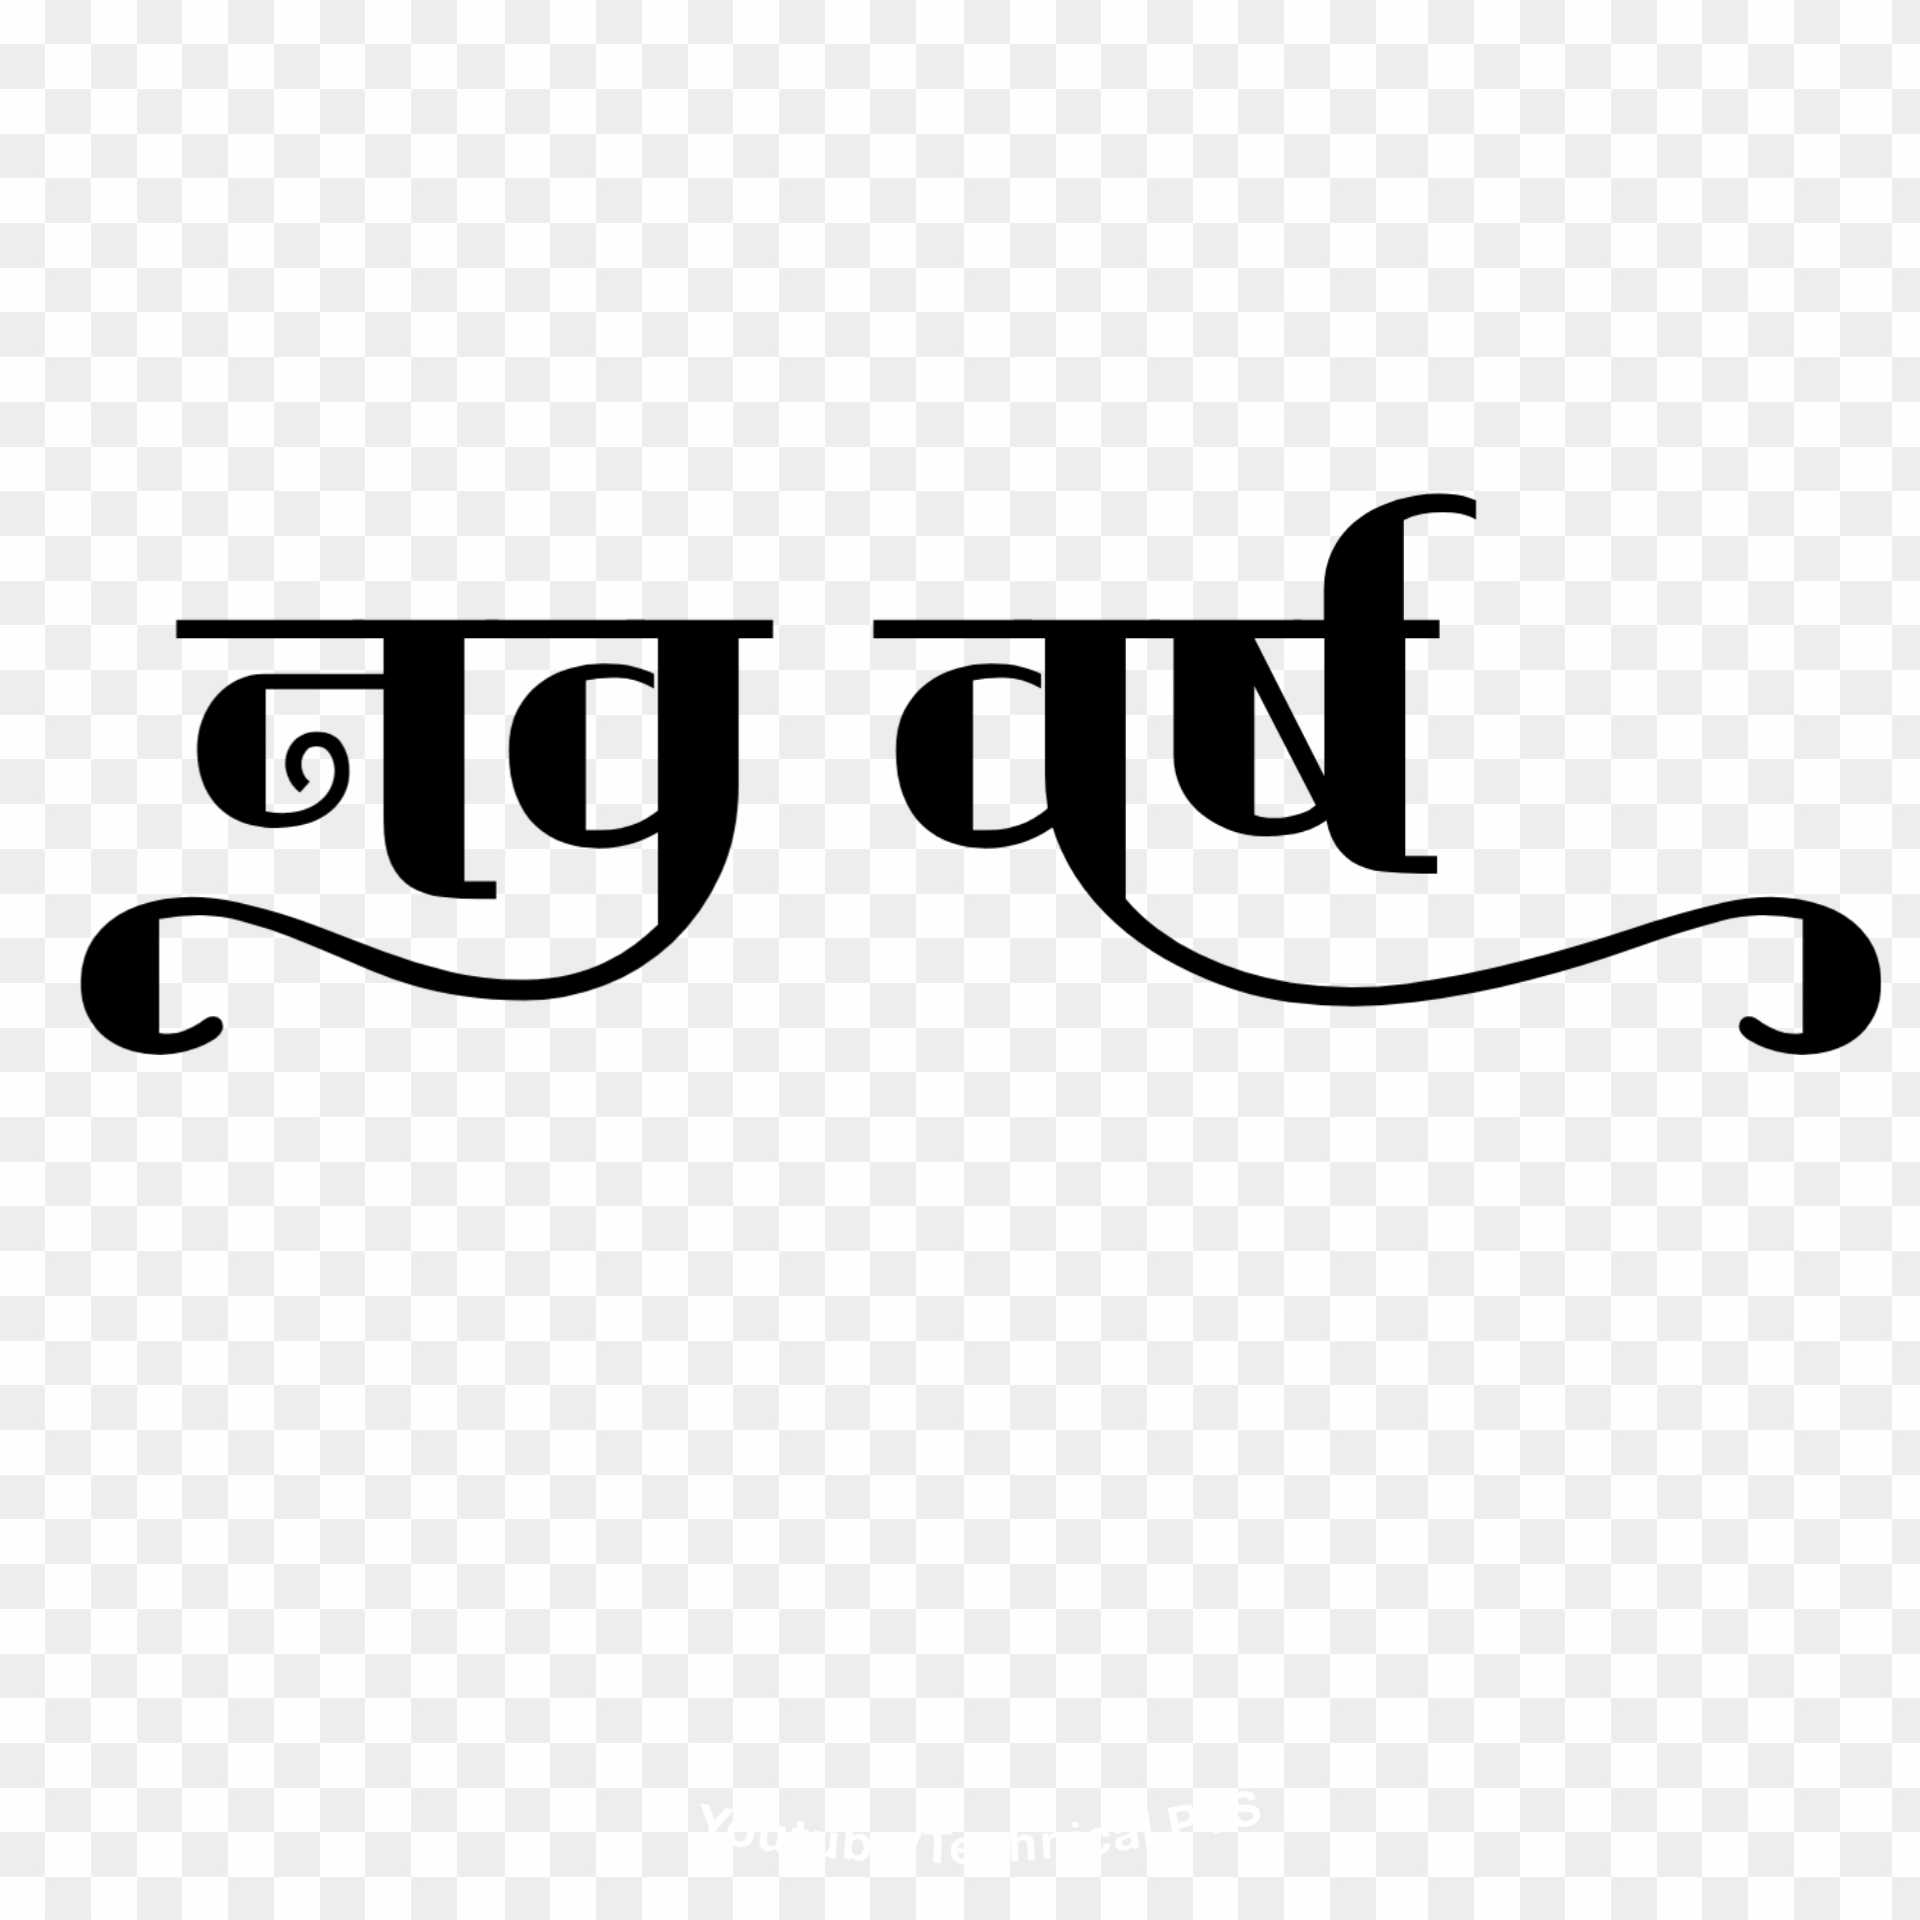 Vastra villa writtehn in hindi and english text. Vastra villa clothing  brand logo. 19626866 Vector Art at Vecteezy